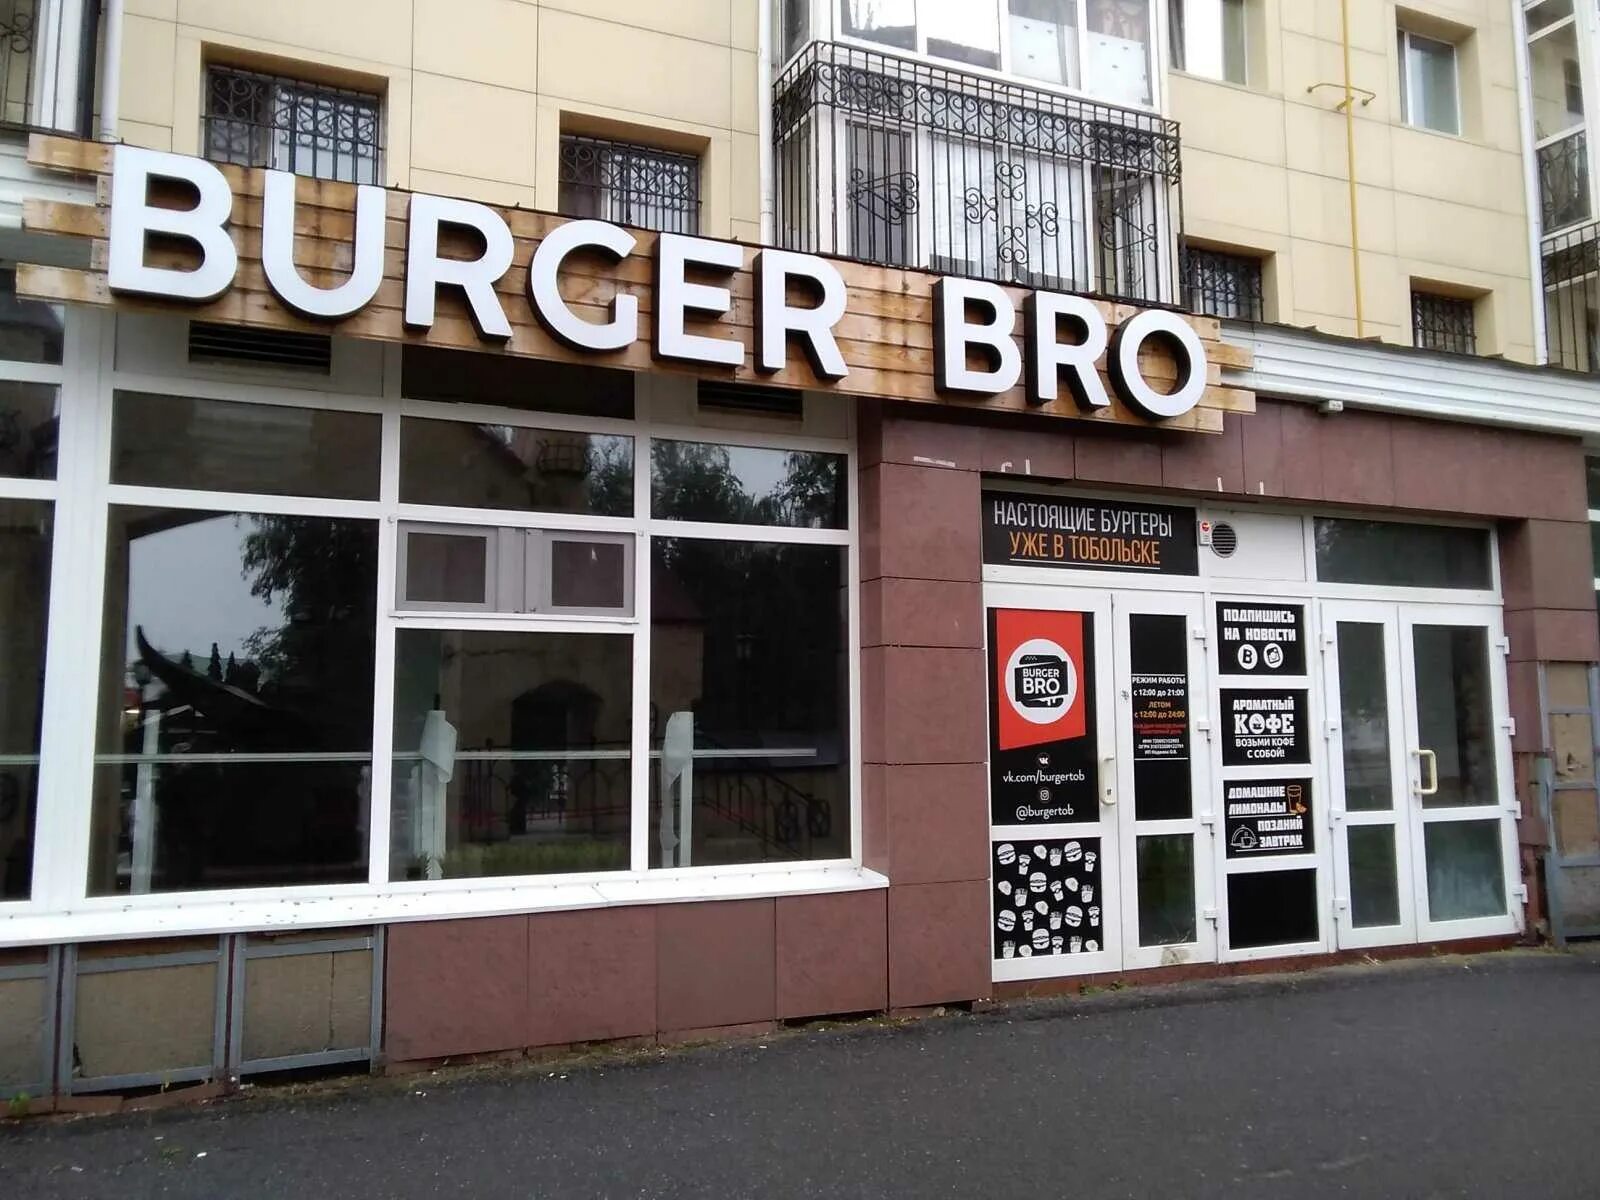 Burger bro. Bro Burger Улан-Удэ. Бро бургер Георгиевск. Бургер бро Гуково. Bro burger